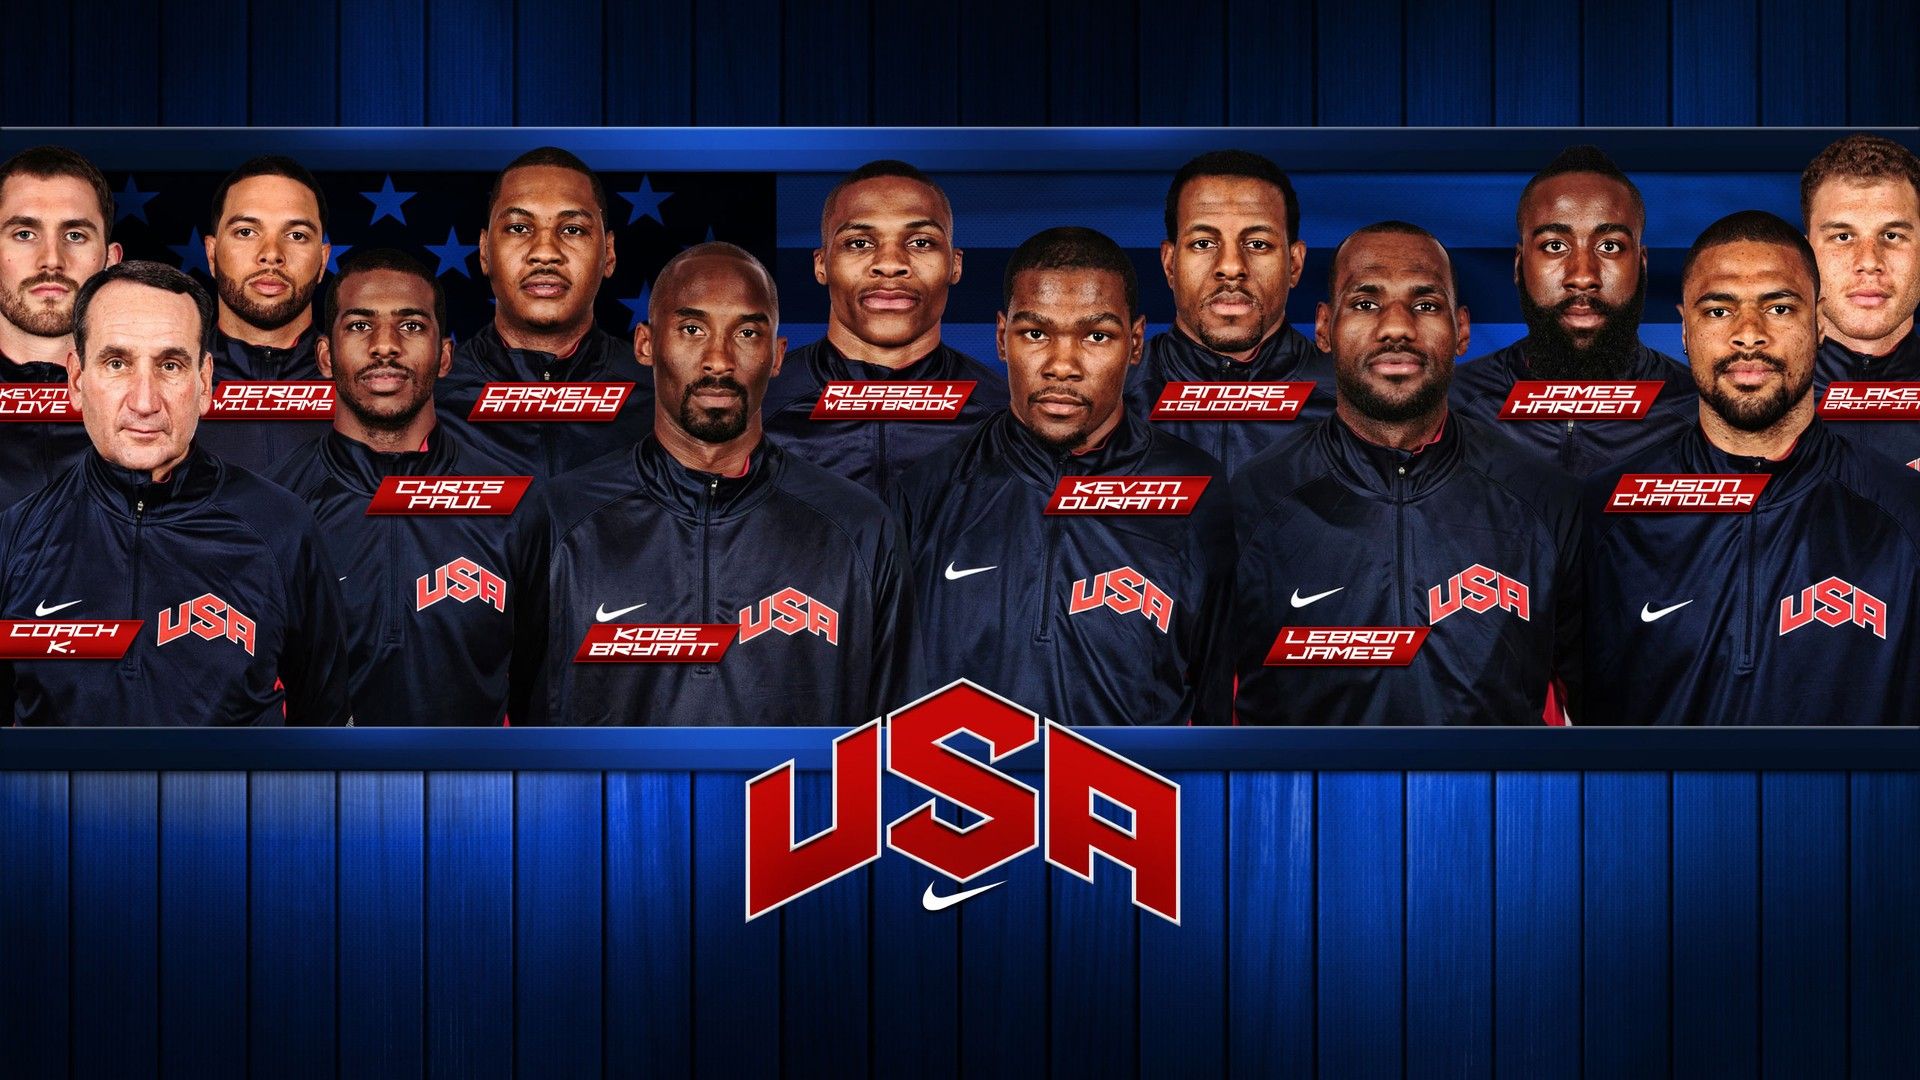 Sports team USA NBA basketball Olympics Dream Team Olympic Games basketball player wallpaperx1080